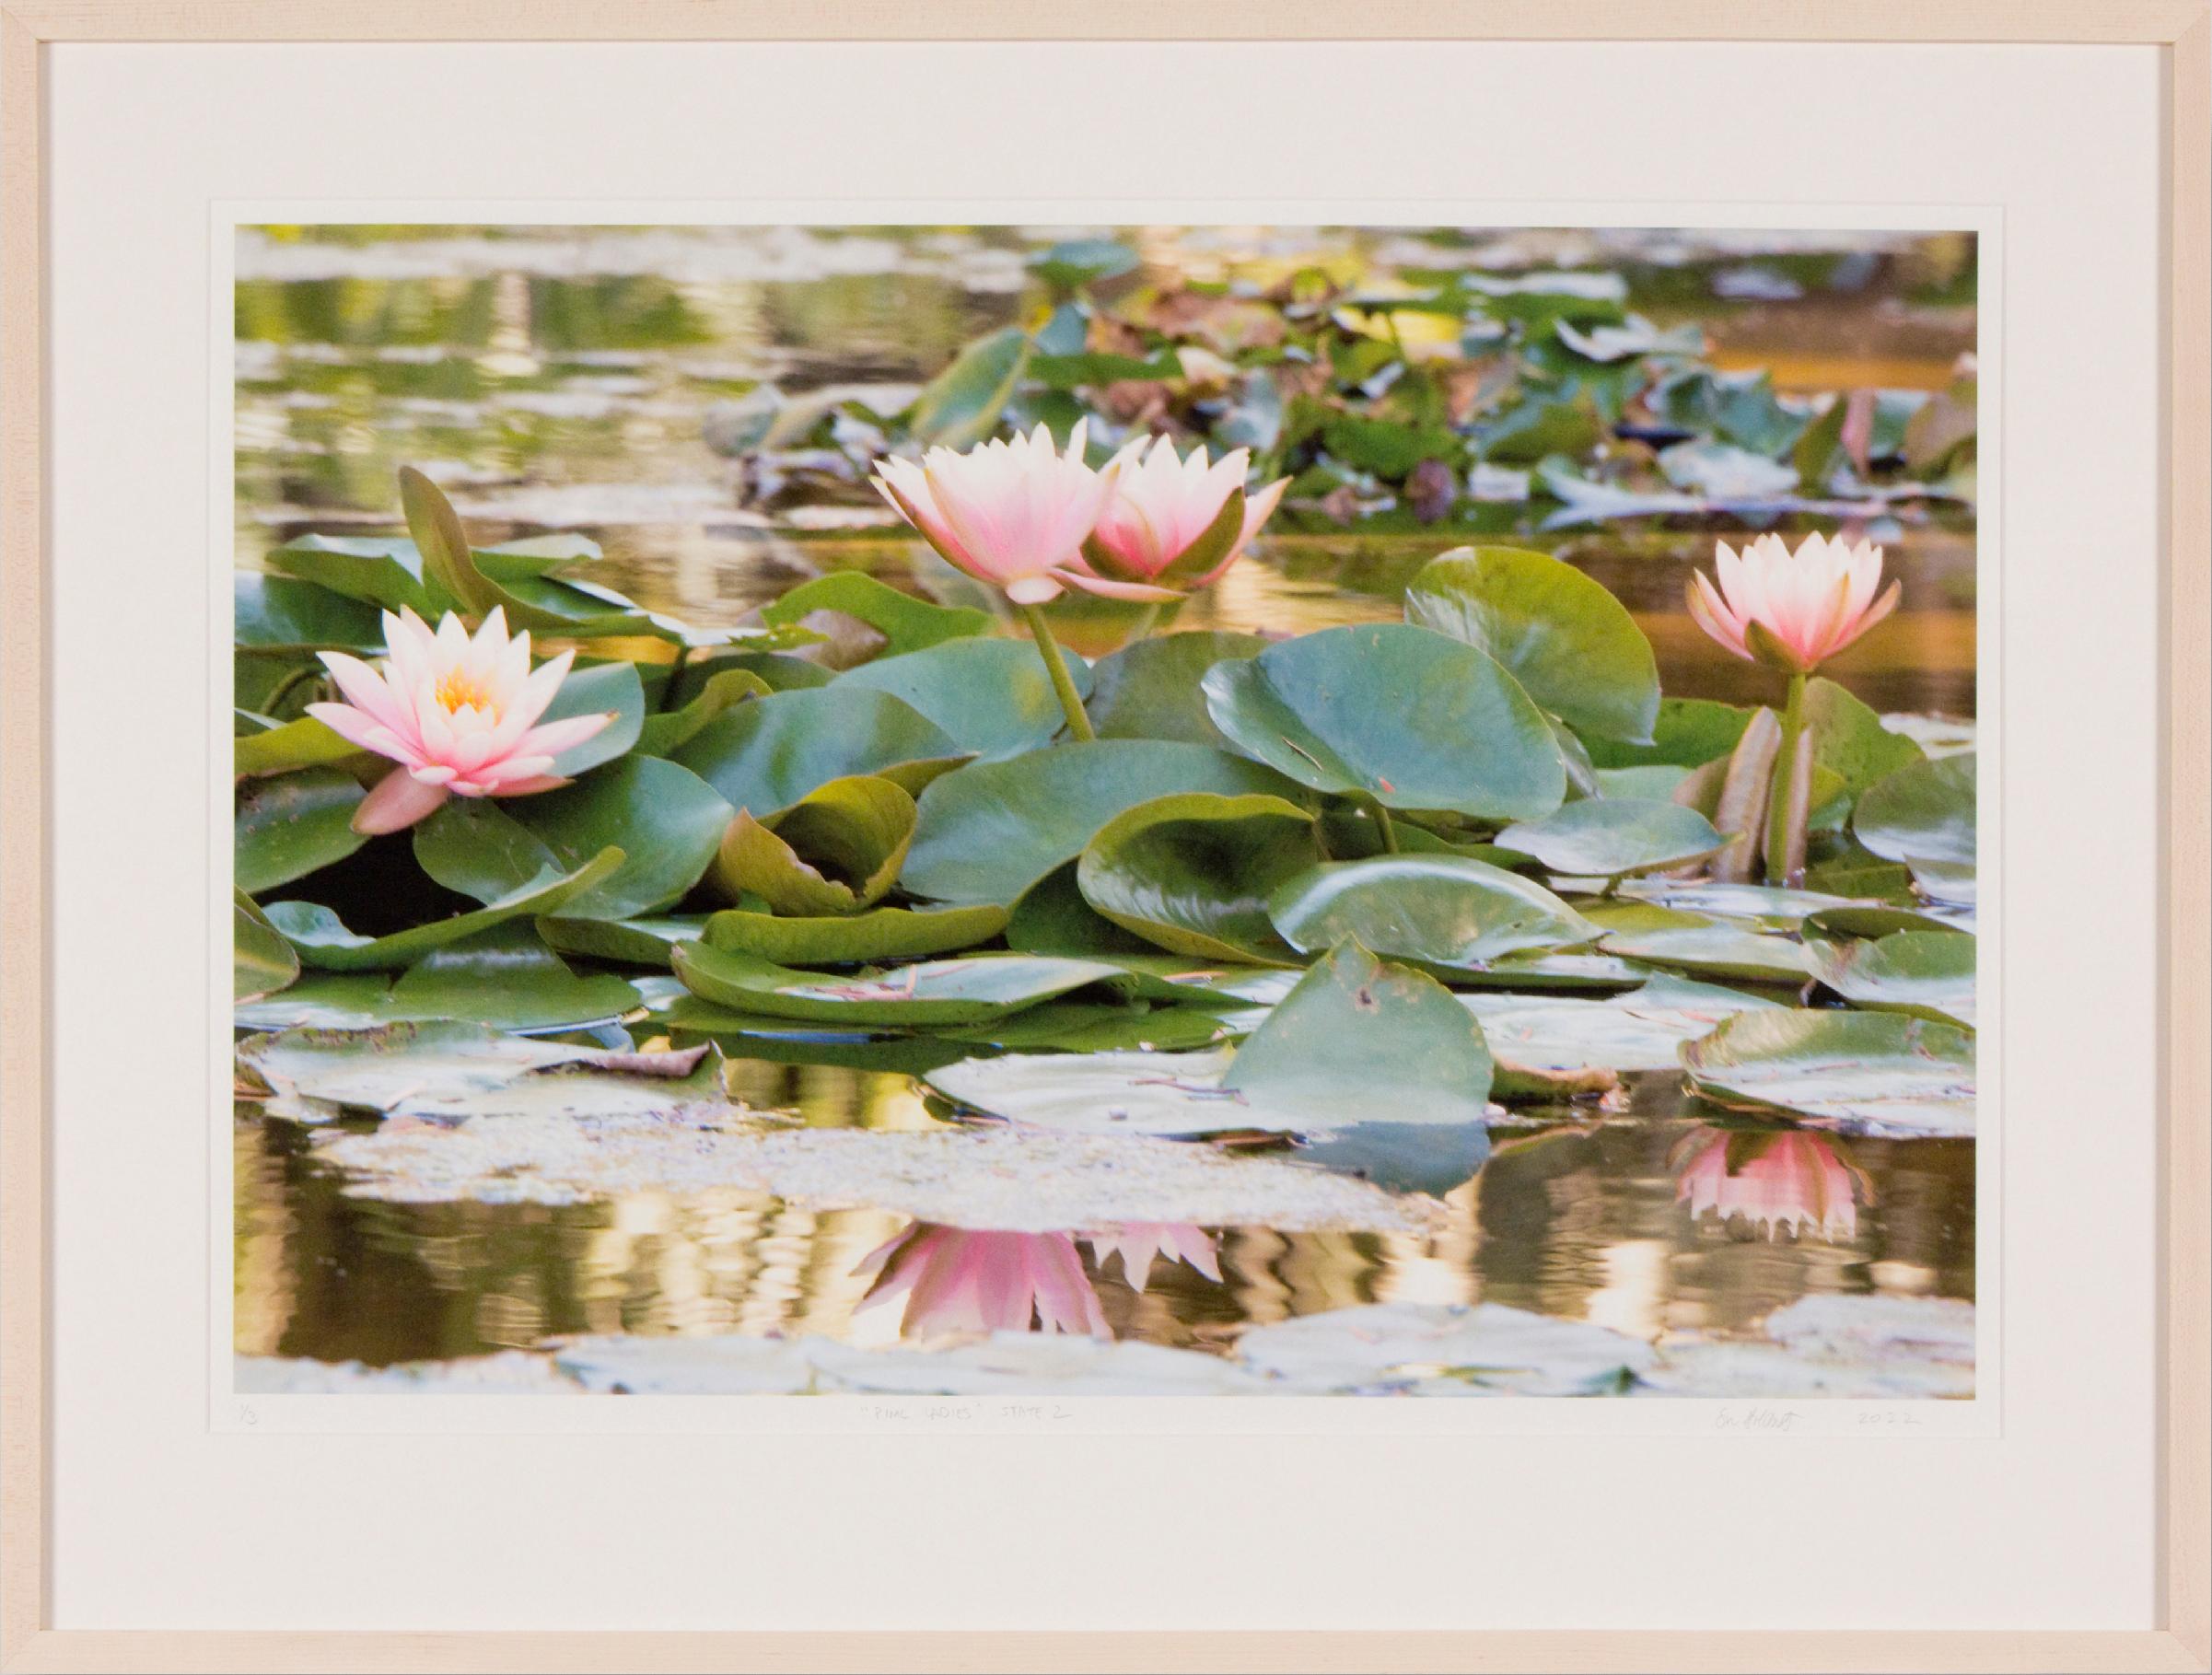 Susan Goldsmith Landscape Print - PINK LADIES STATE 2 - Floral Art Photography / Water Lily / Botanic Garden